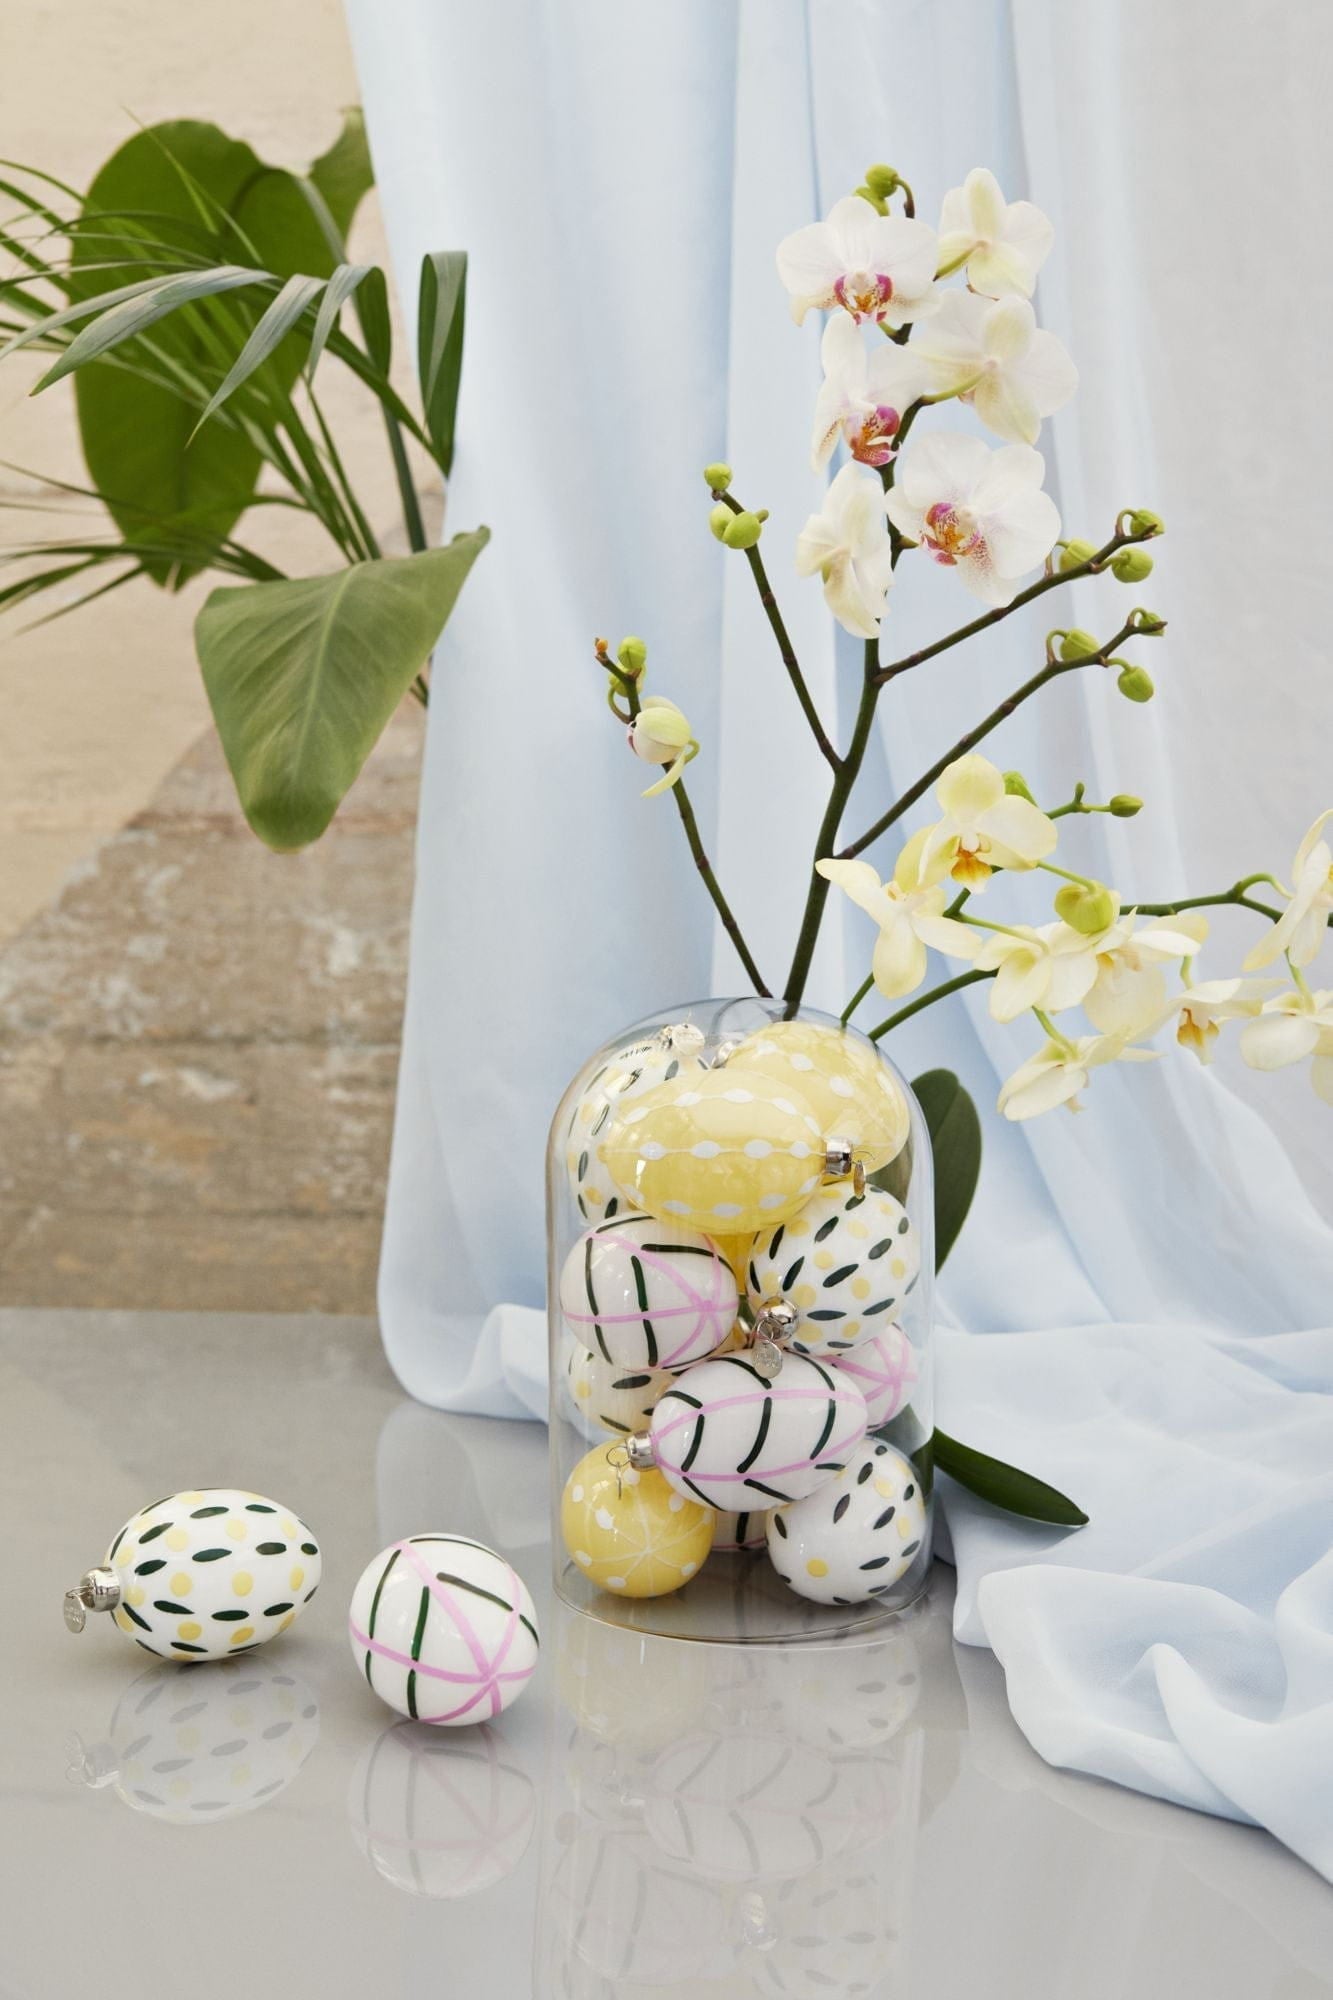 Holmegaard Bijoux de Pâques souvenirs, fruits